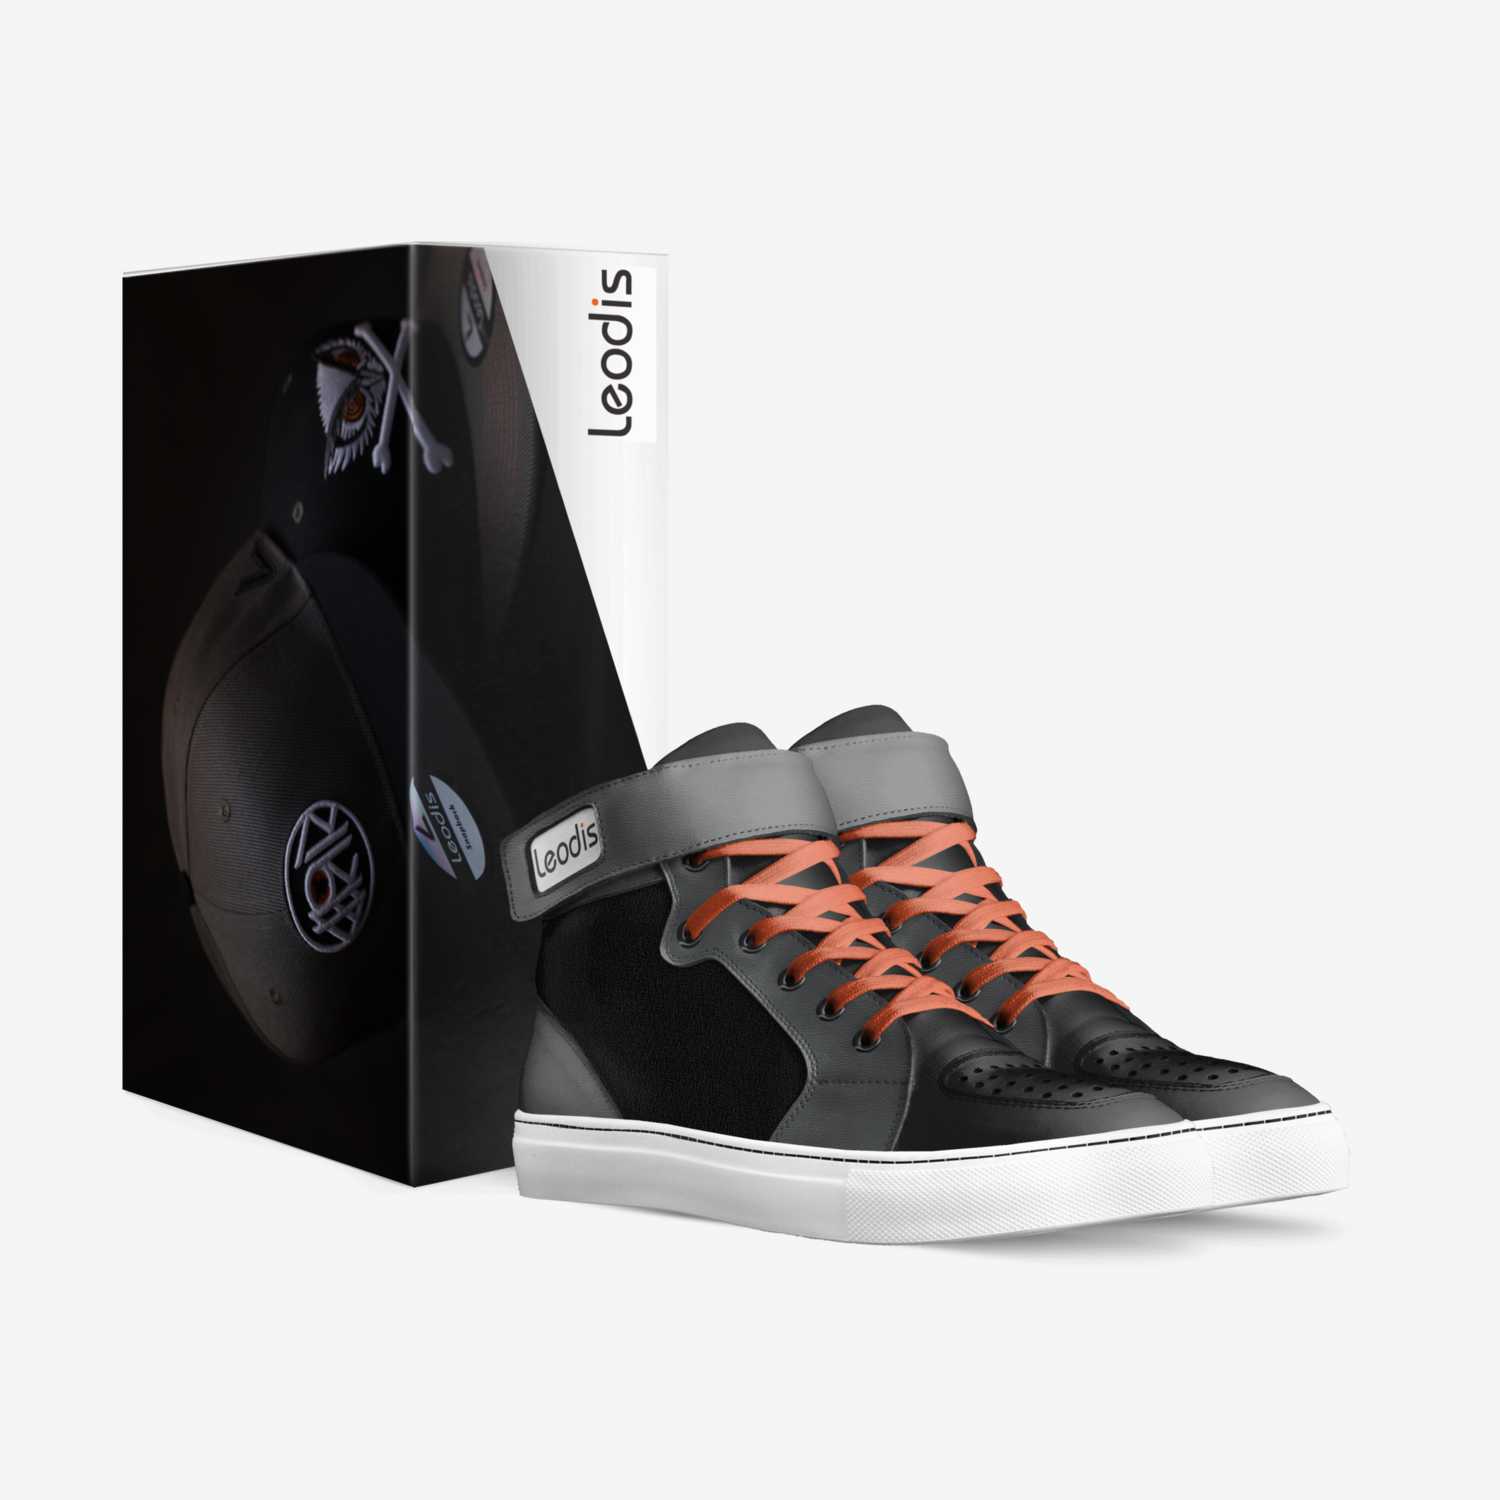 Leodis custom made in Italy shoes by John Barlow | Box view